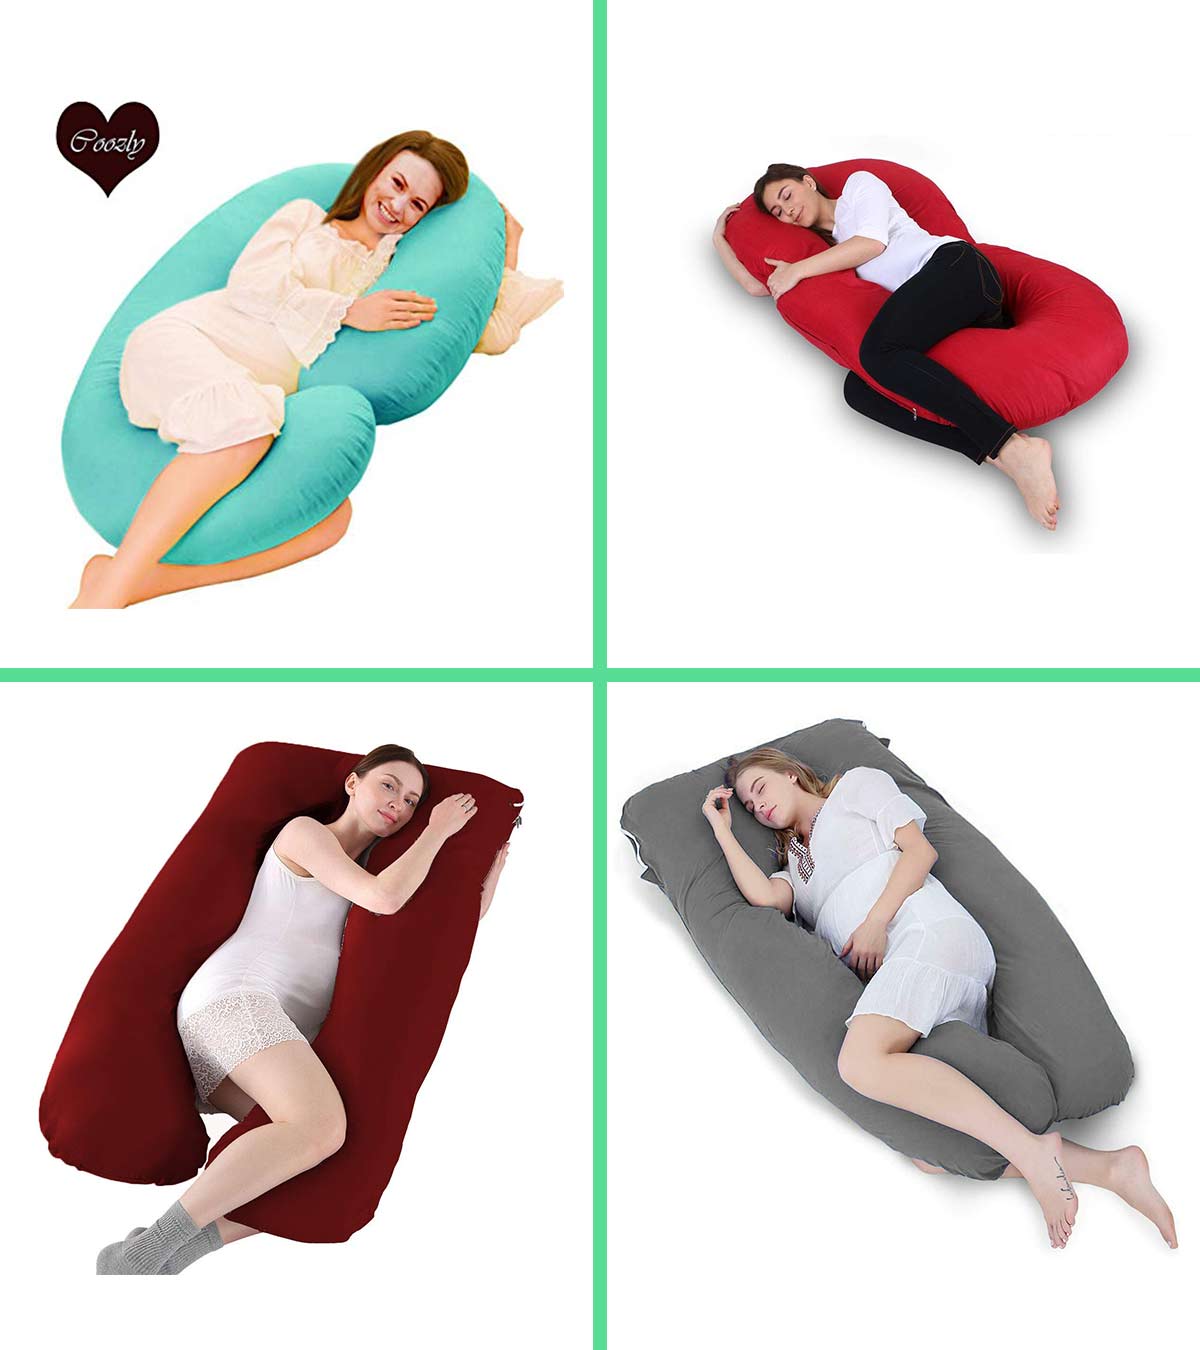 https://www.momjunction.com/wp-content/uploads/2020/09/11-Best-Pregnancy-Pillows-In-India.jpg